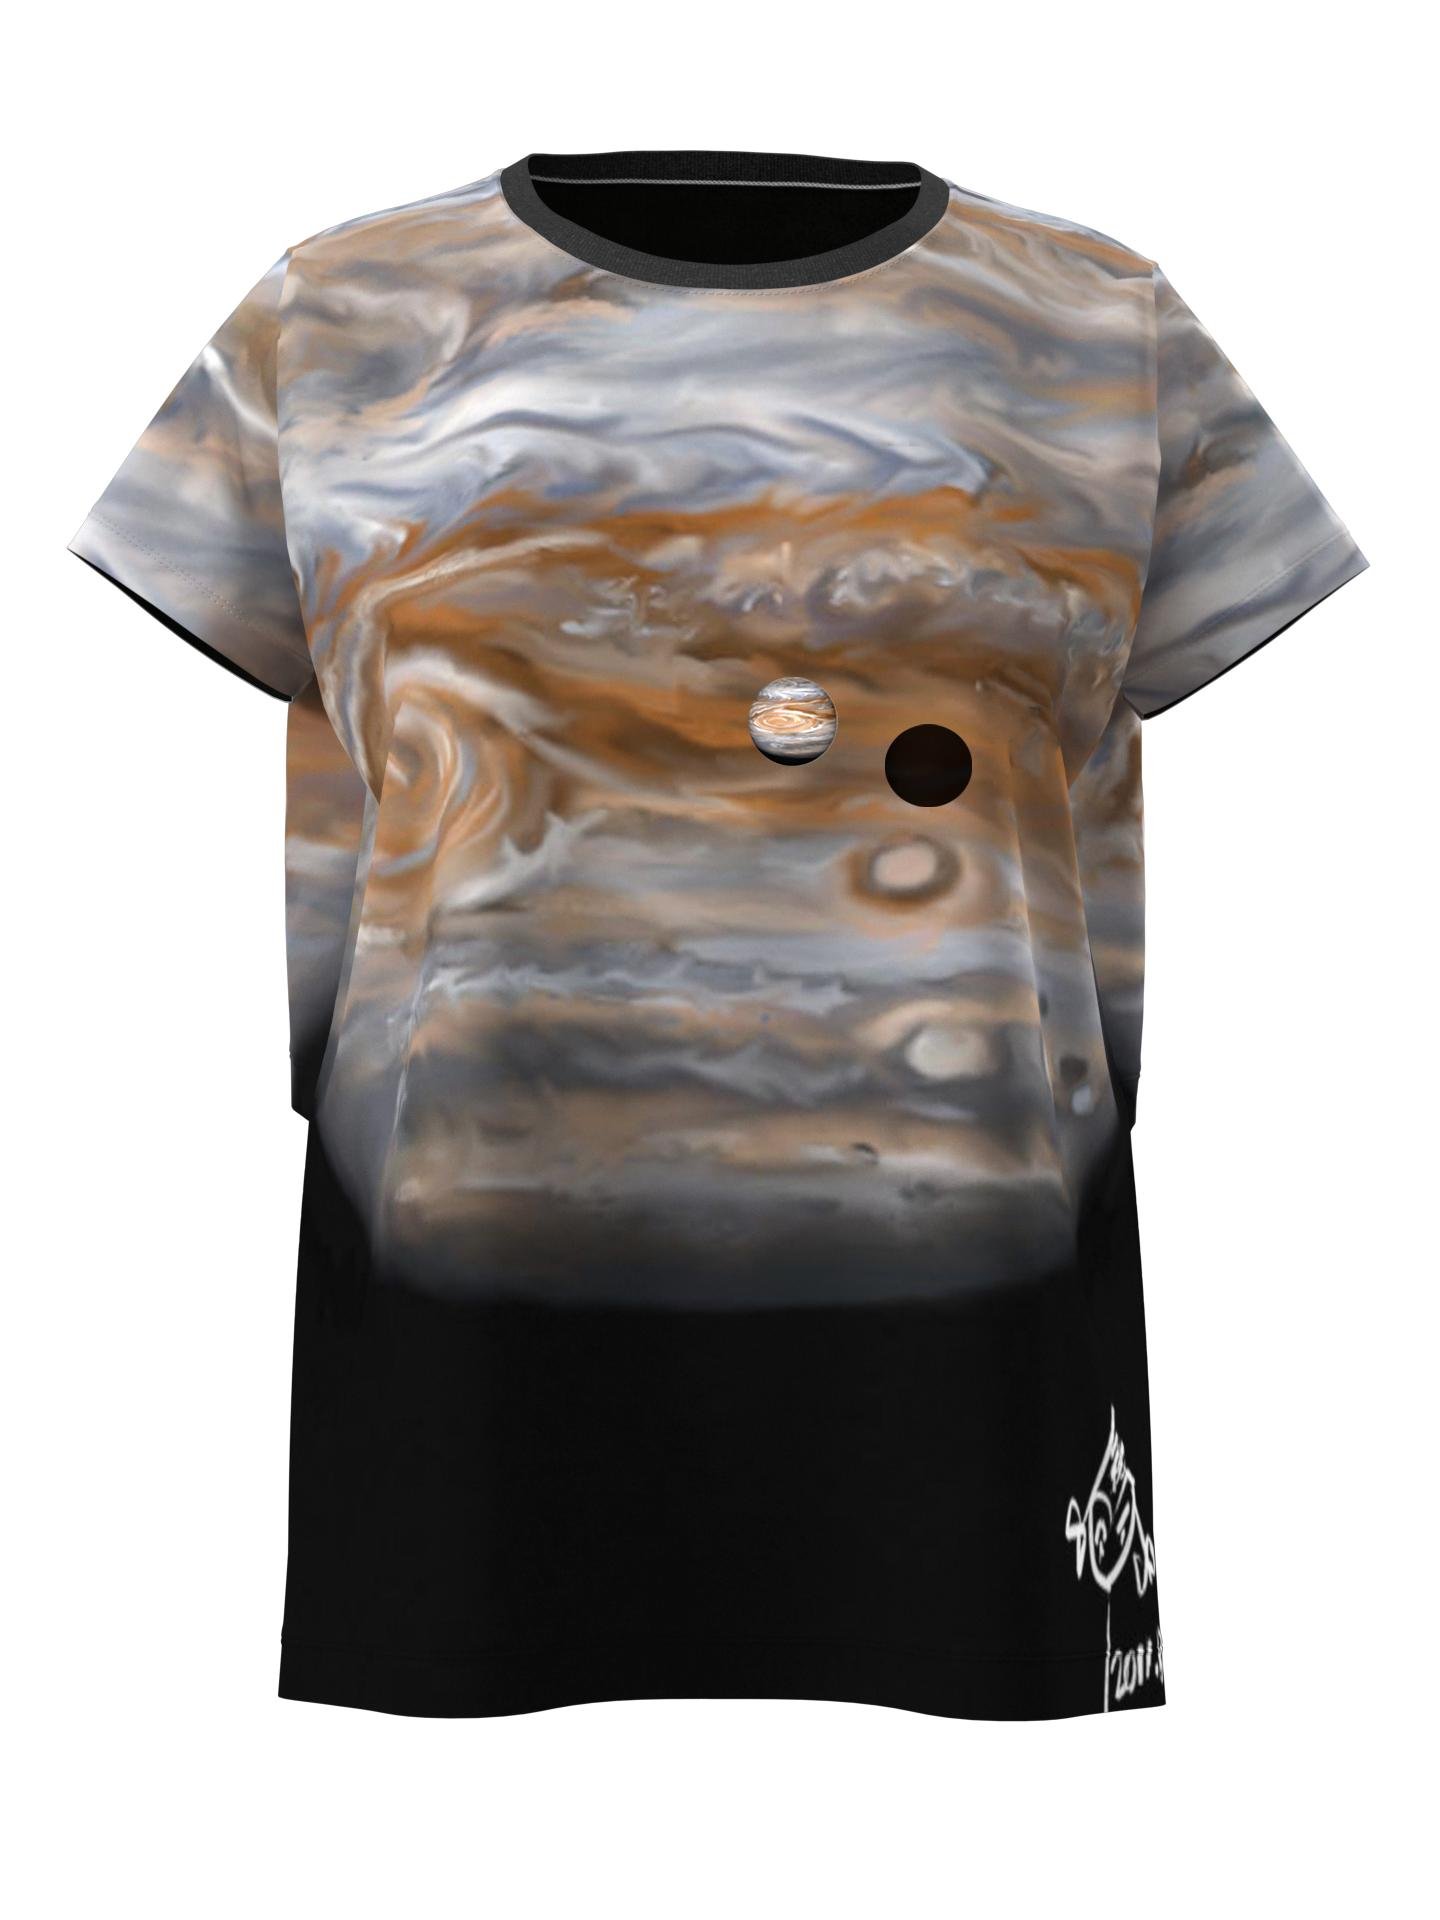 Jupiter shirt by ART BY PHYSICIST